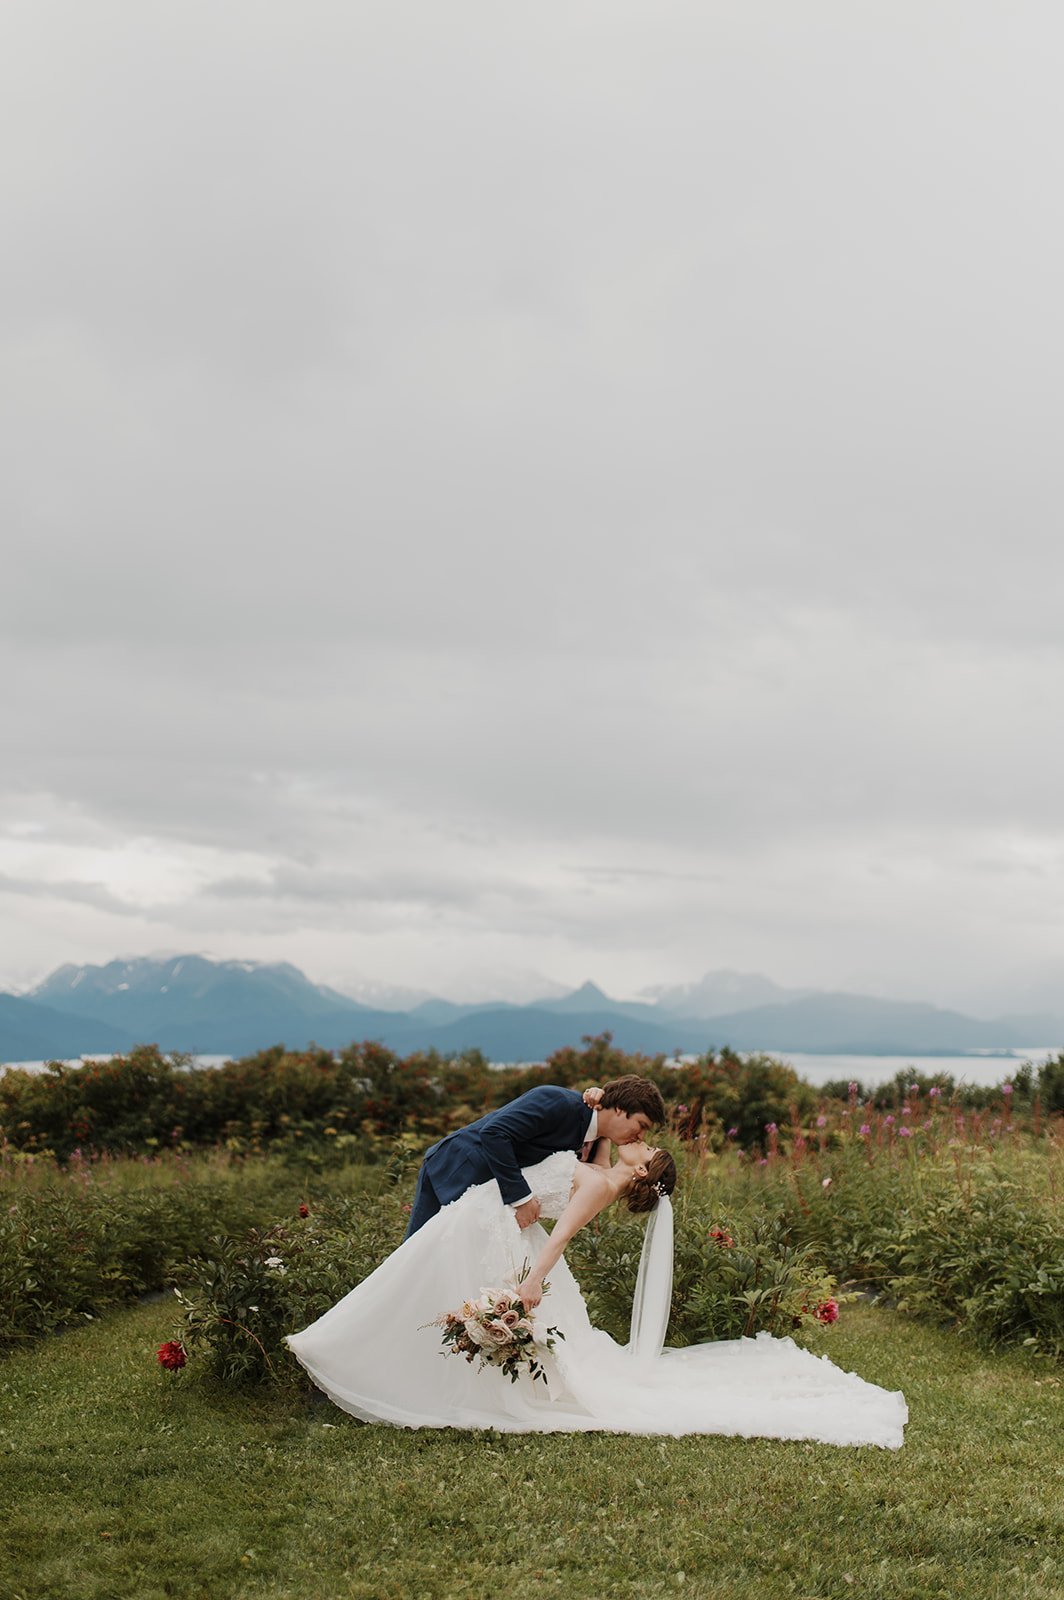 Unforgettable Moments with Luxury Wedding Details | Alaska Wedding Photographer